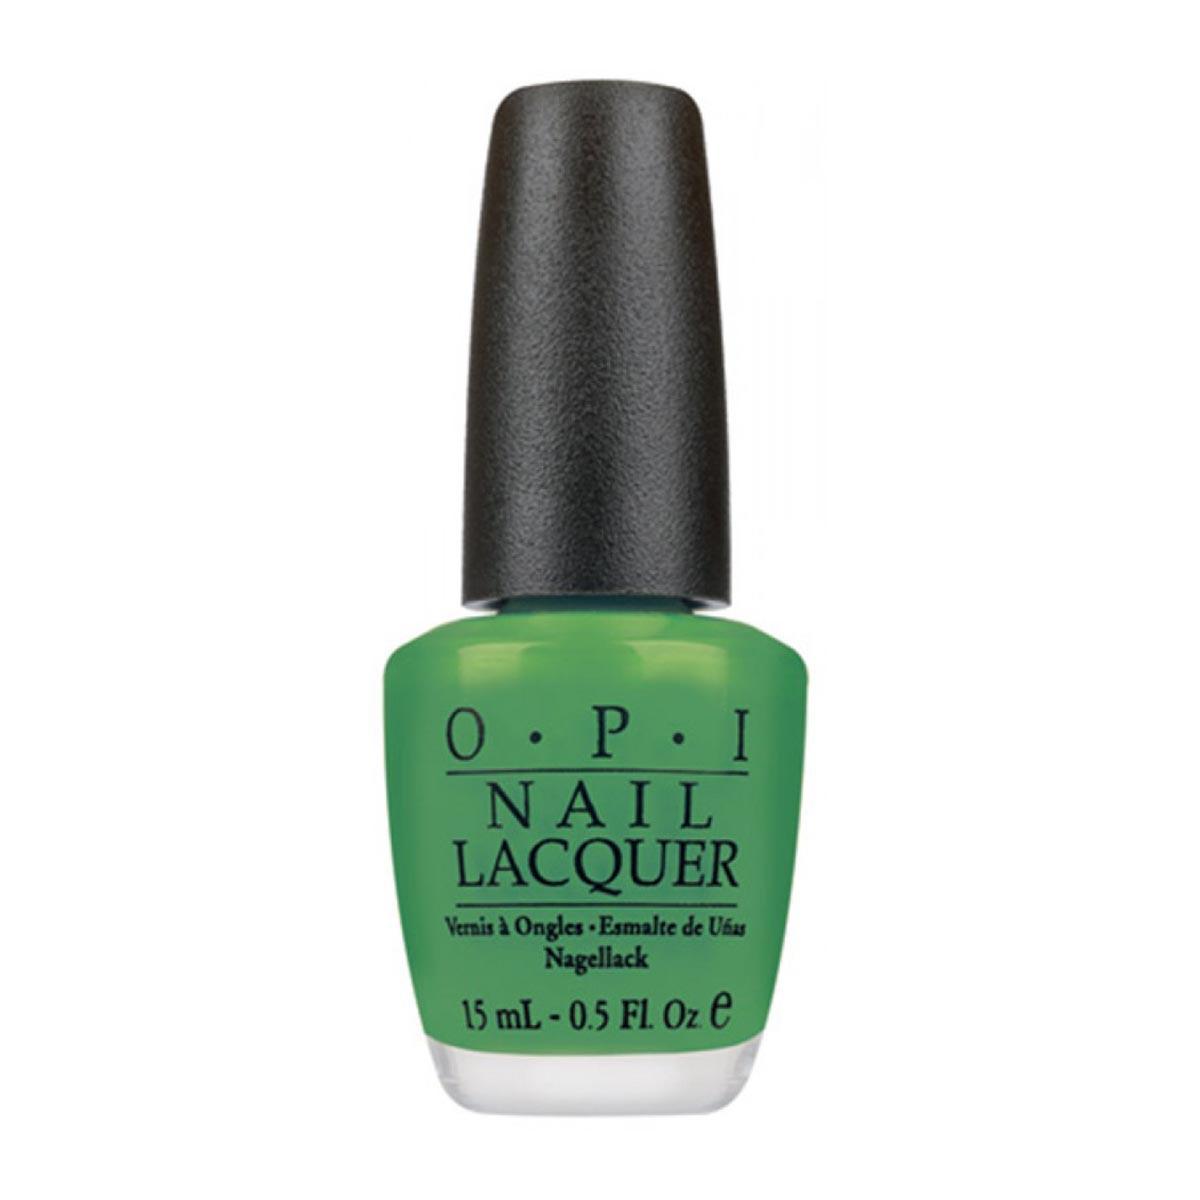 opi-nail-lacquer-nlb69-greenwich-village